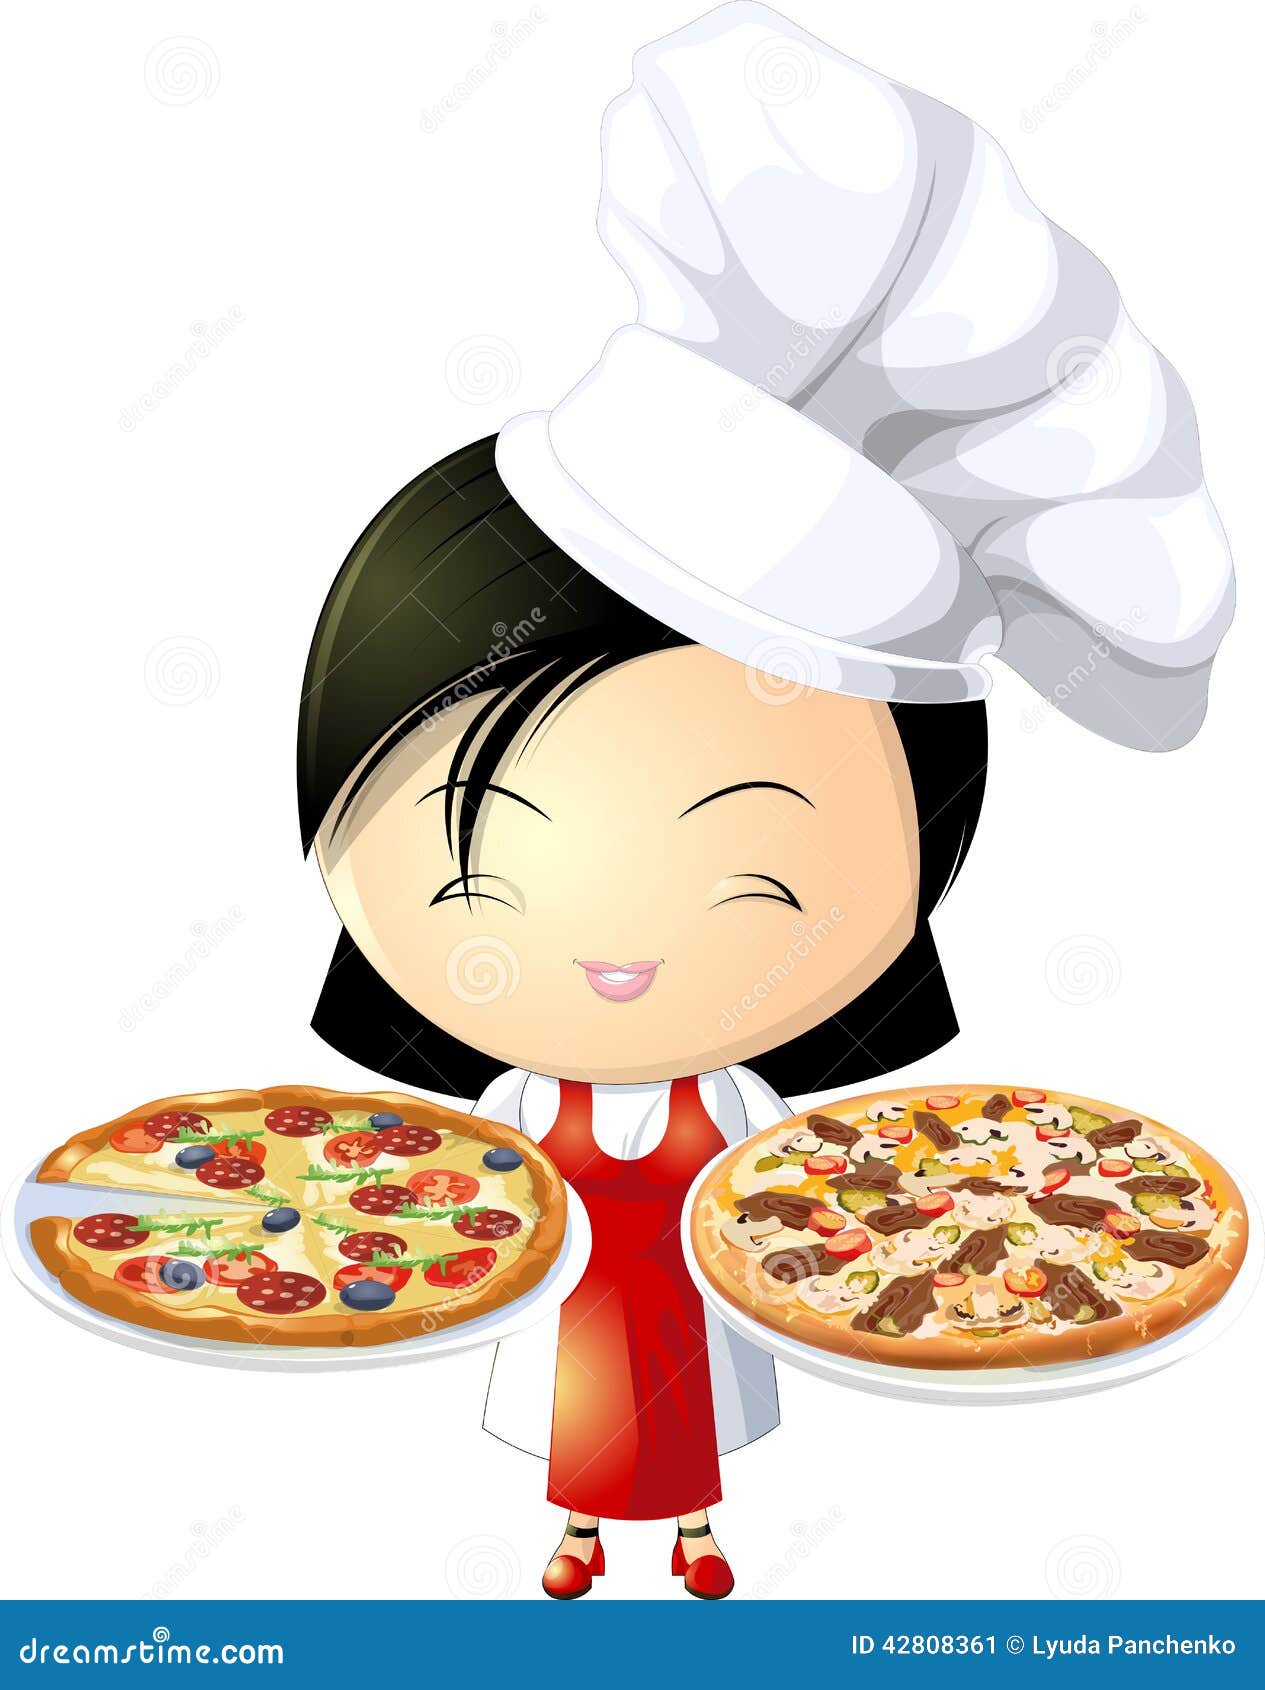 pizza girl clipart - photo #15